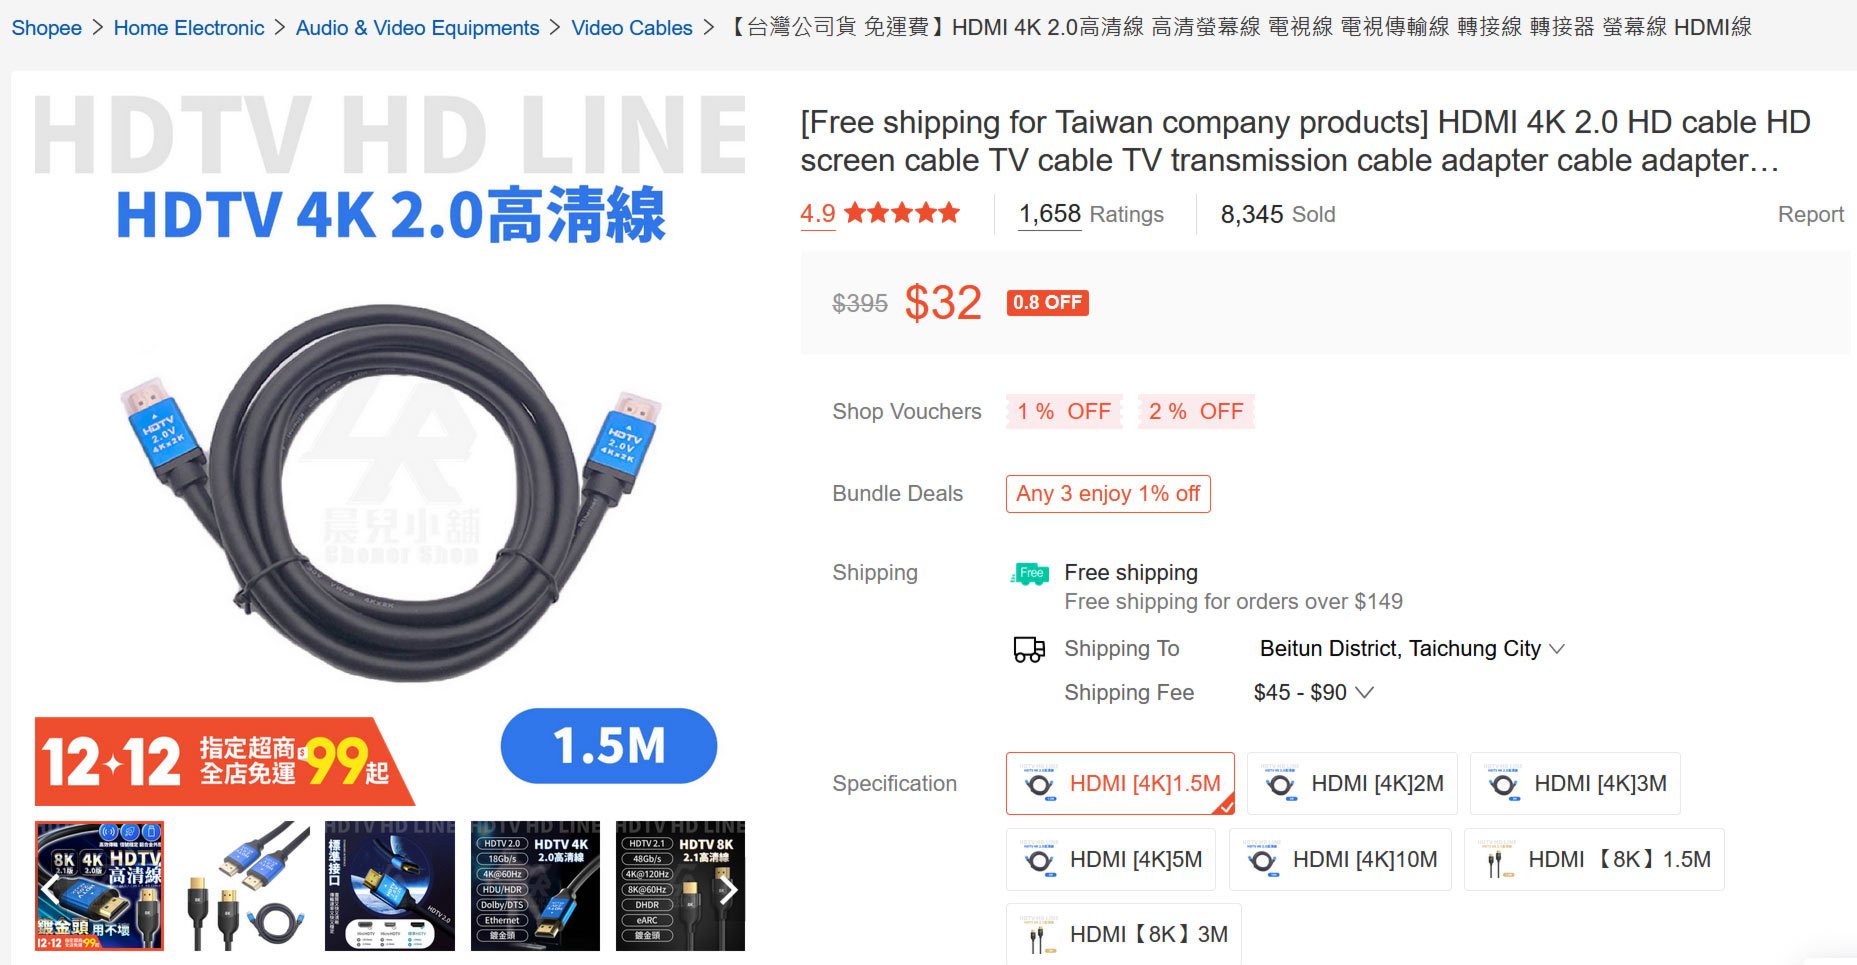 HDMI cables crackdown